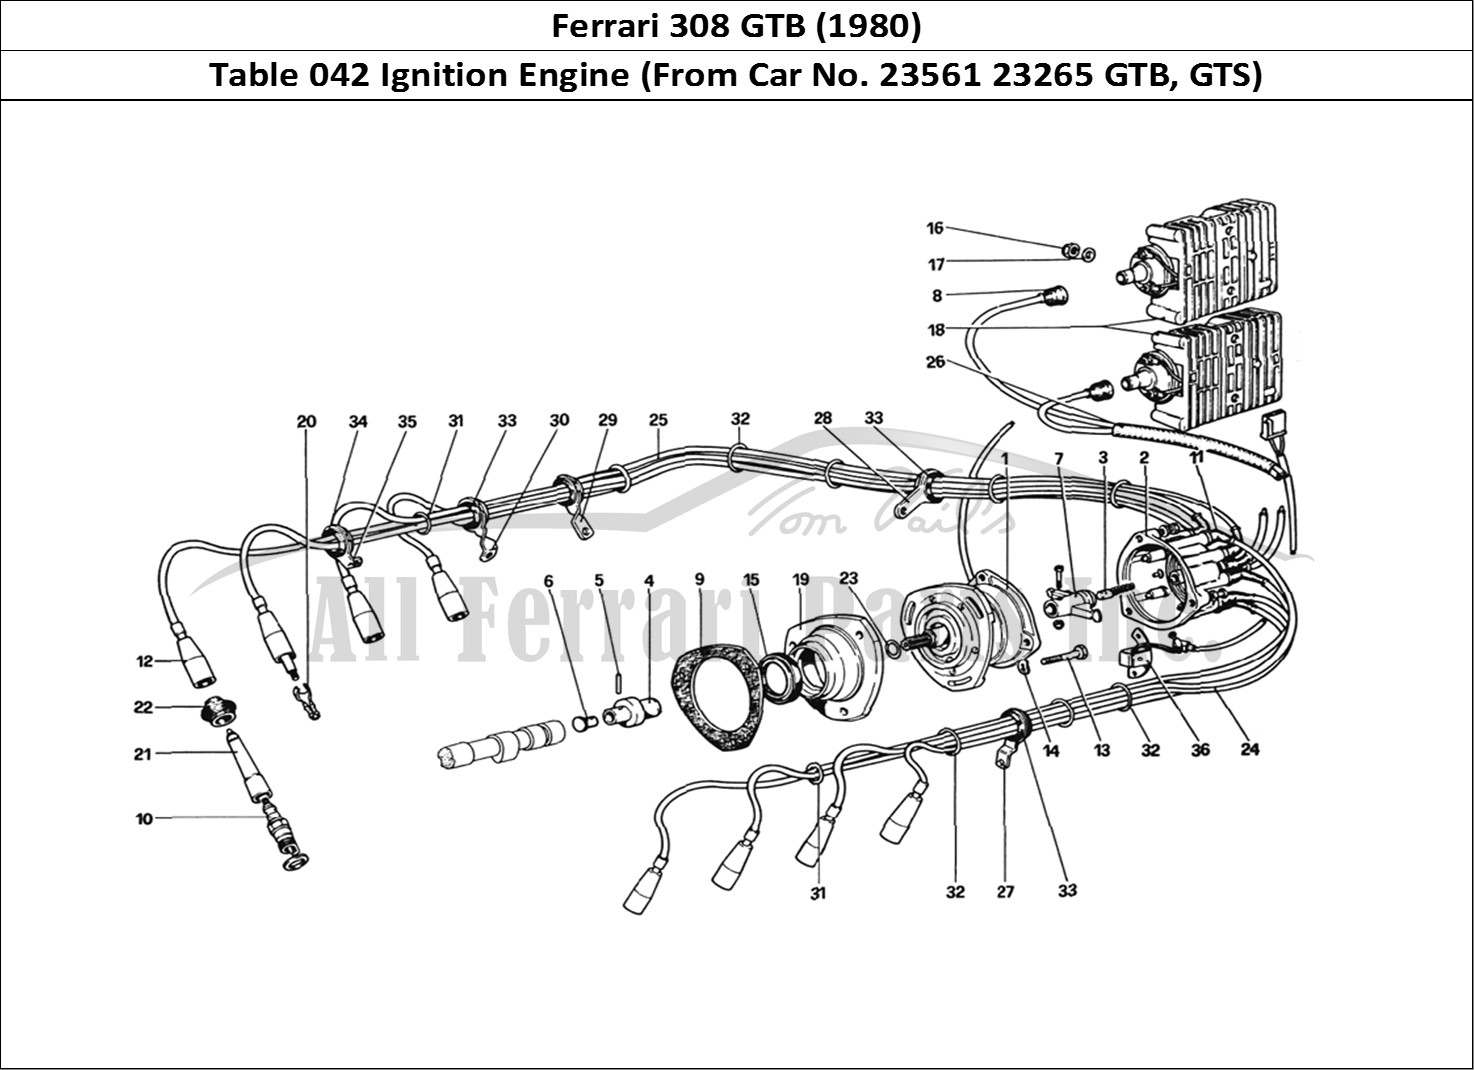 Ferrari Parts Ferrari 308 GTB (1980) Page 042 Engine Ignition (From Car